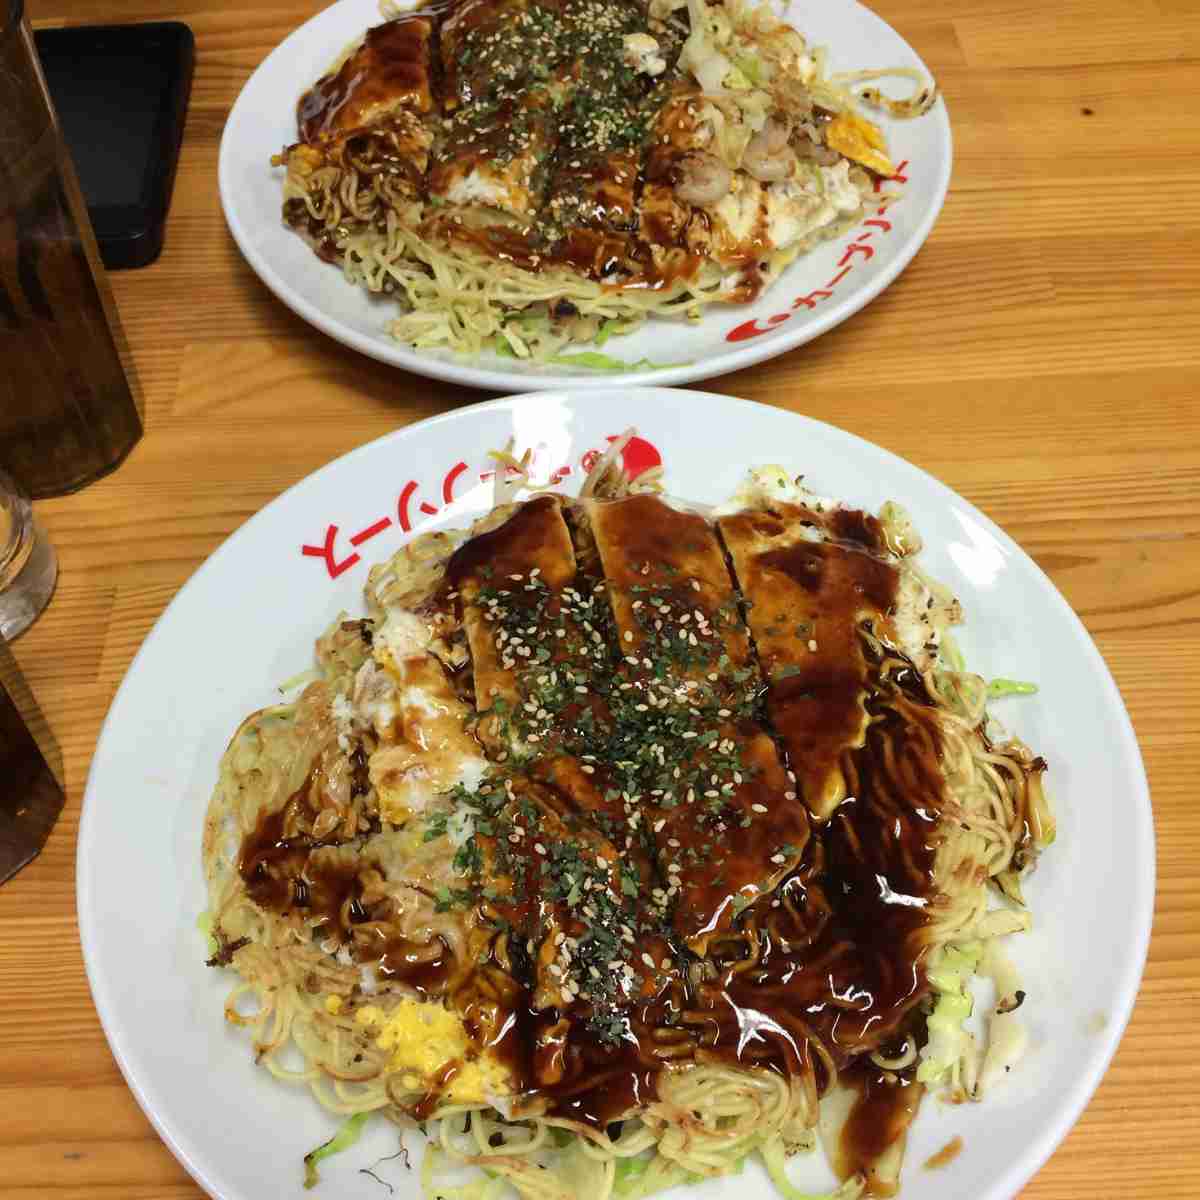 Hiroshima okonomiyaki with yakisoba at the bottom